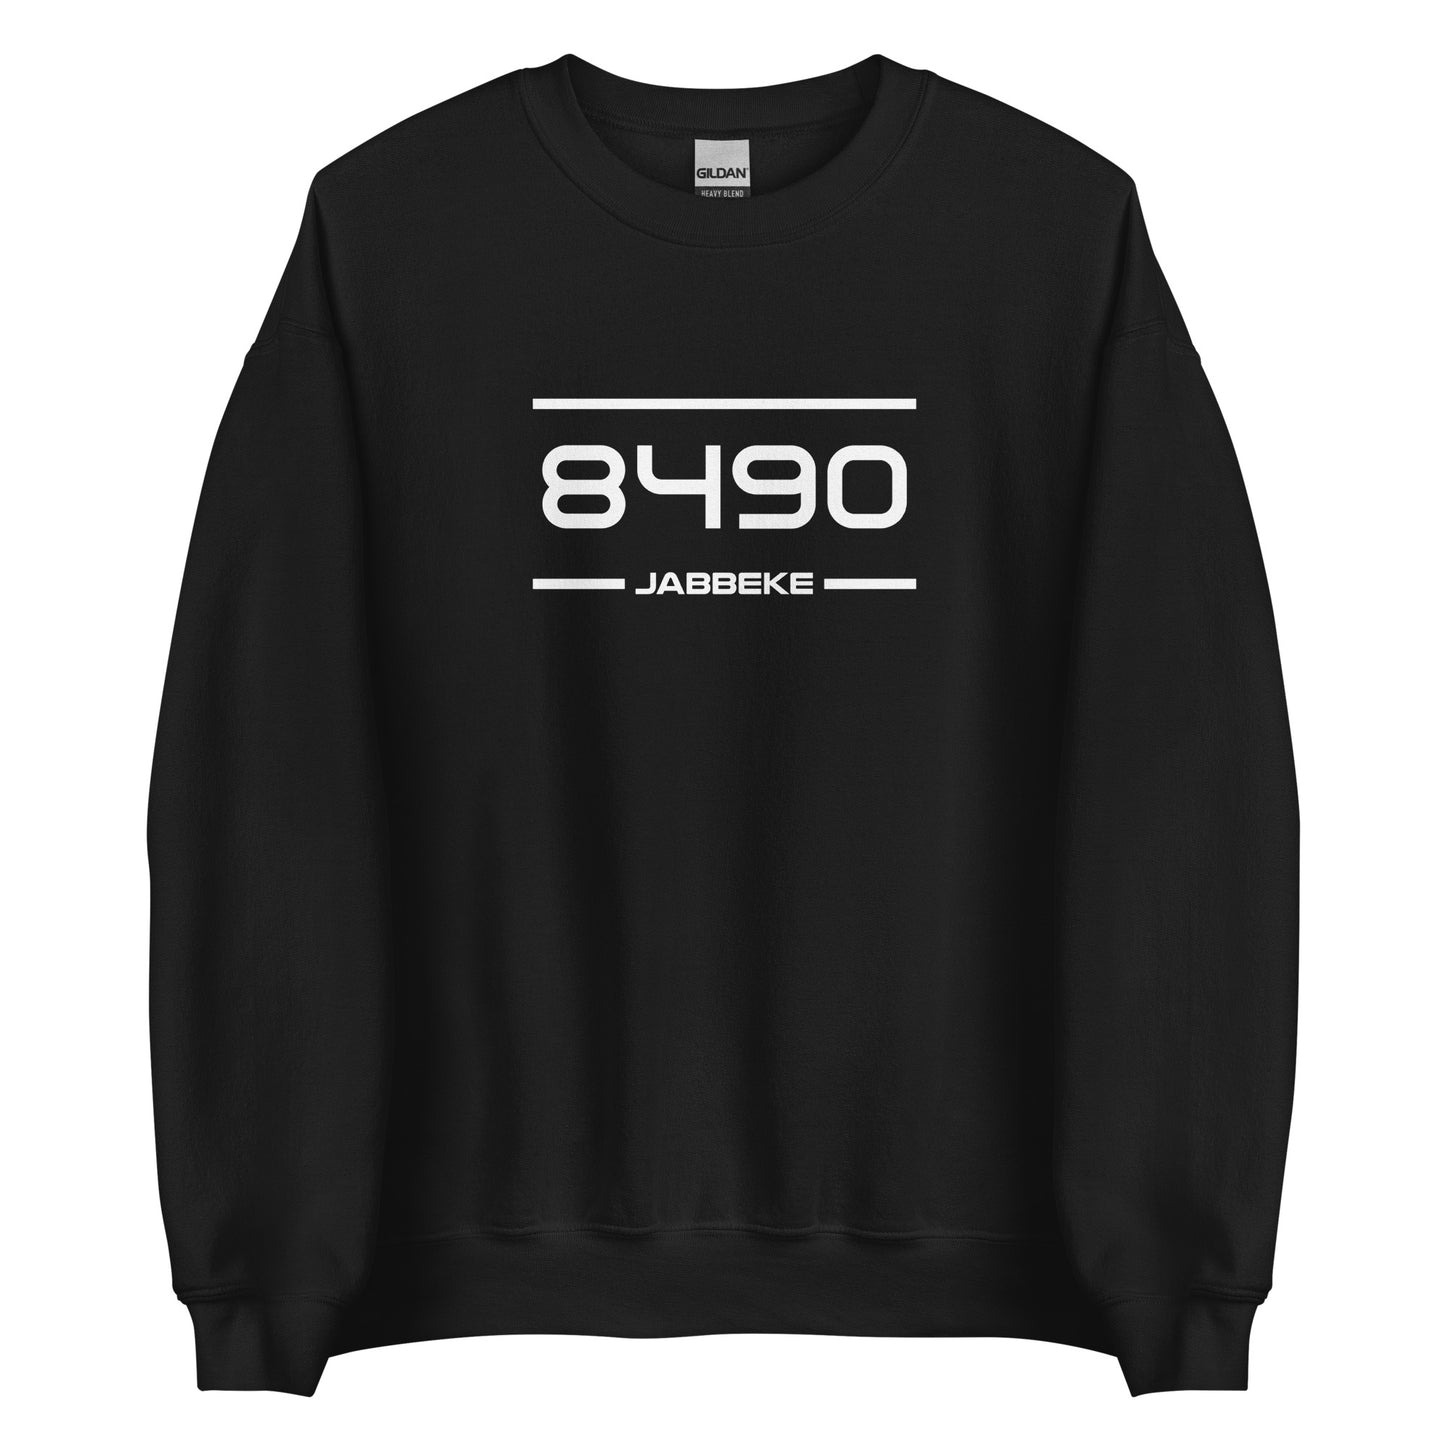 Sweater - 8490 - Jabbeke (M/V)